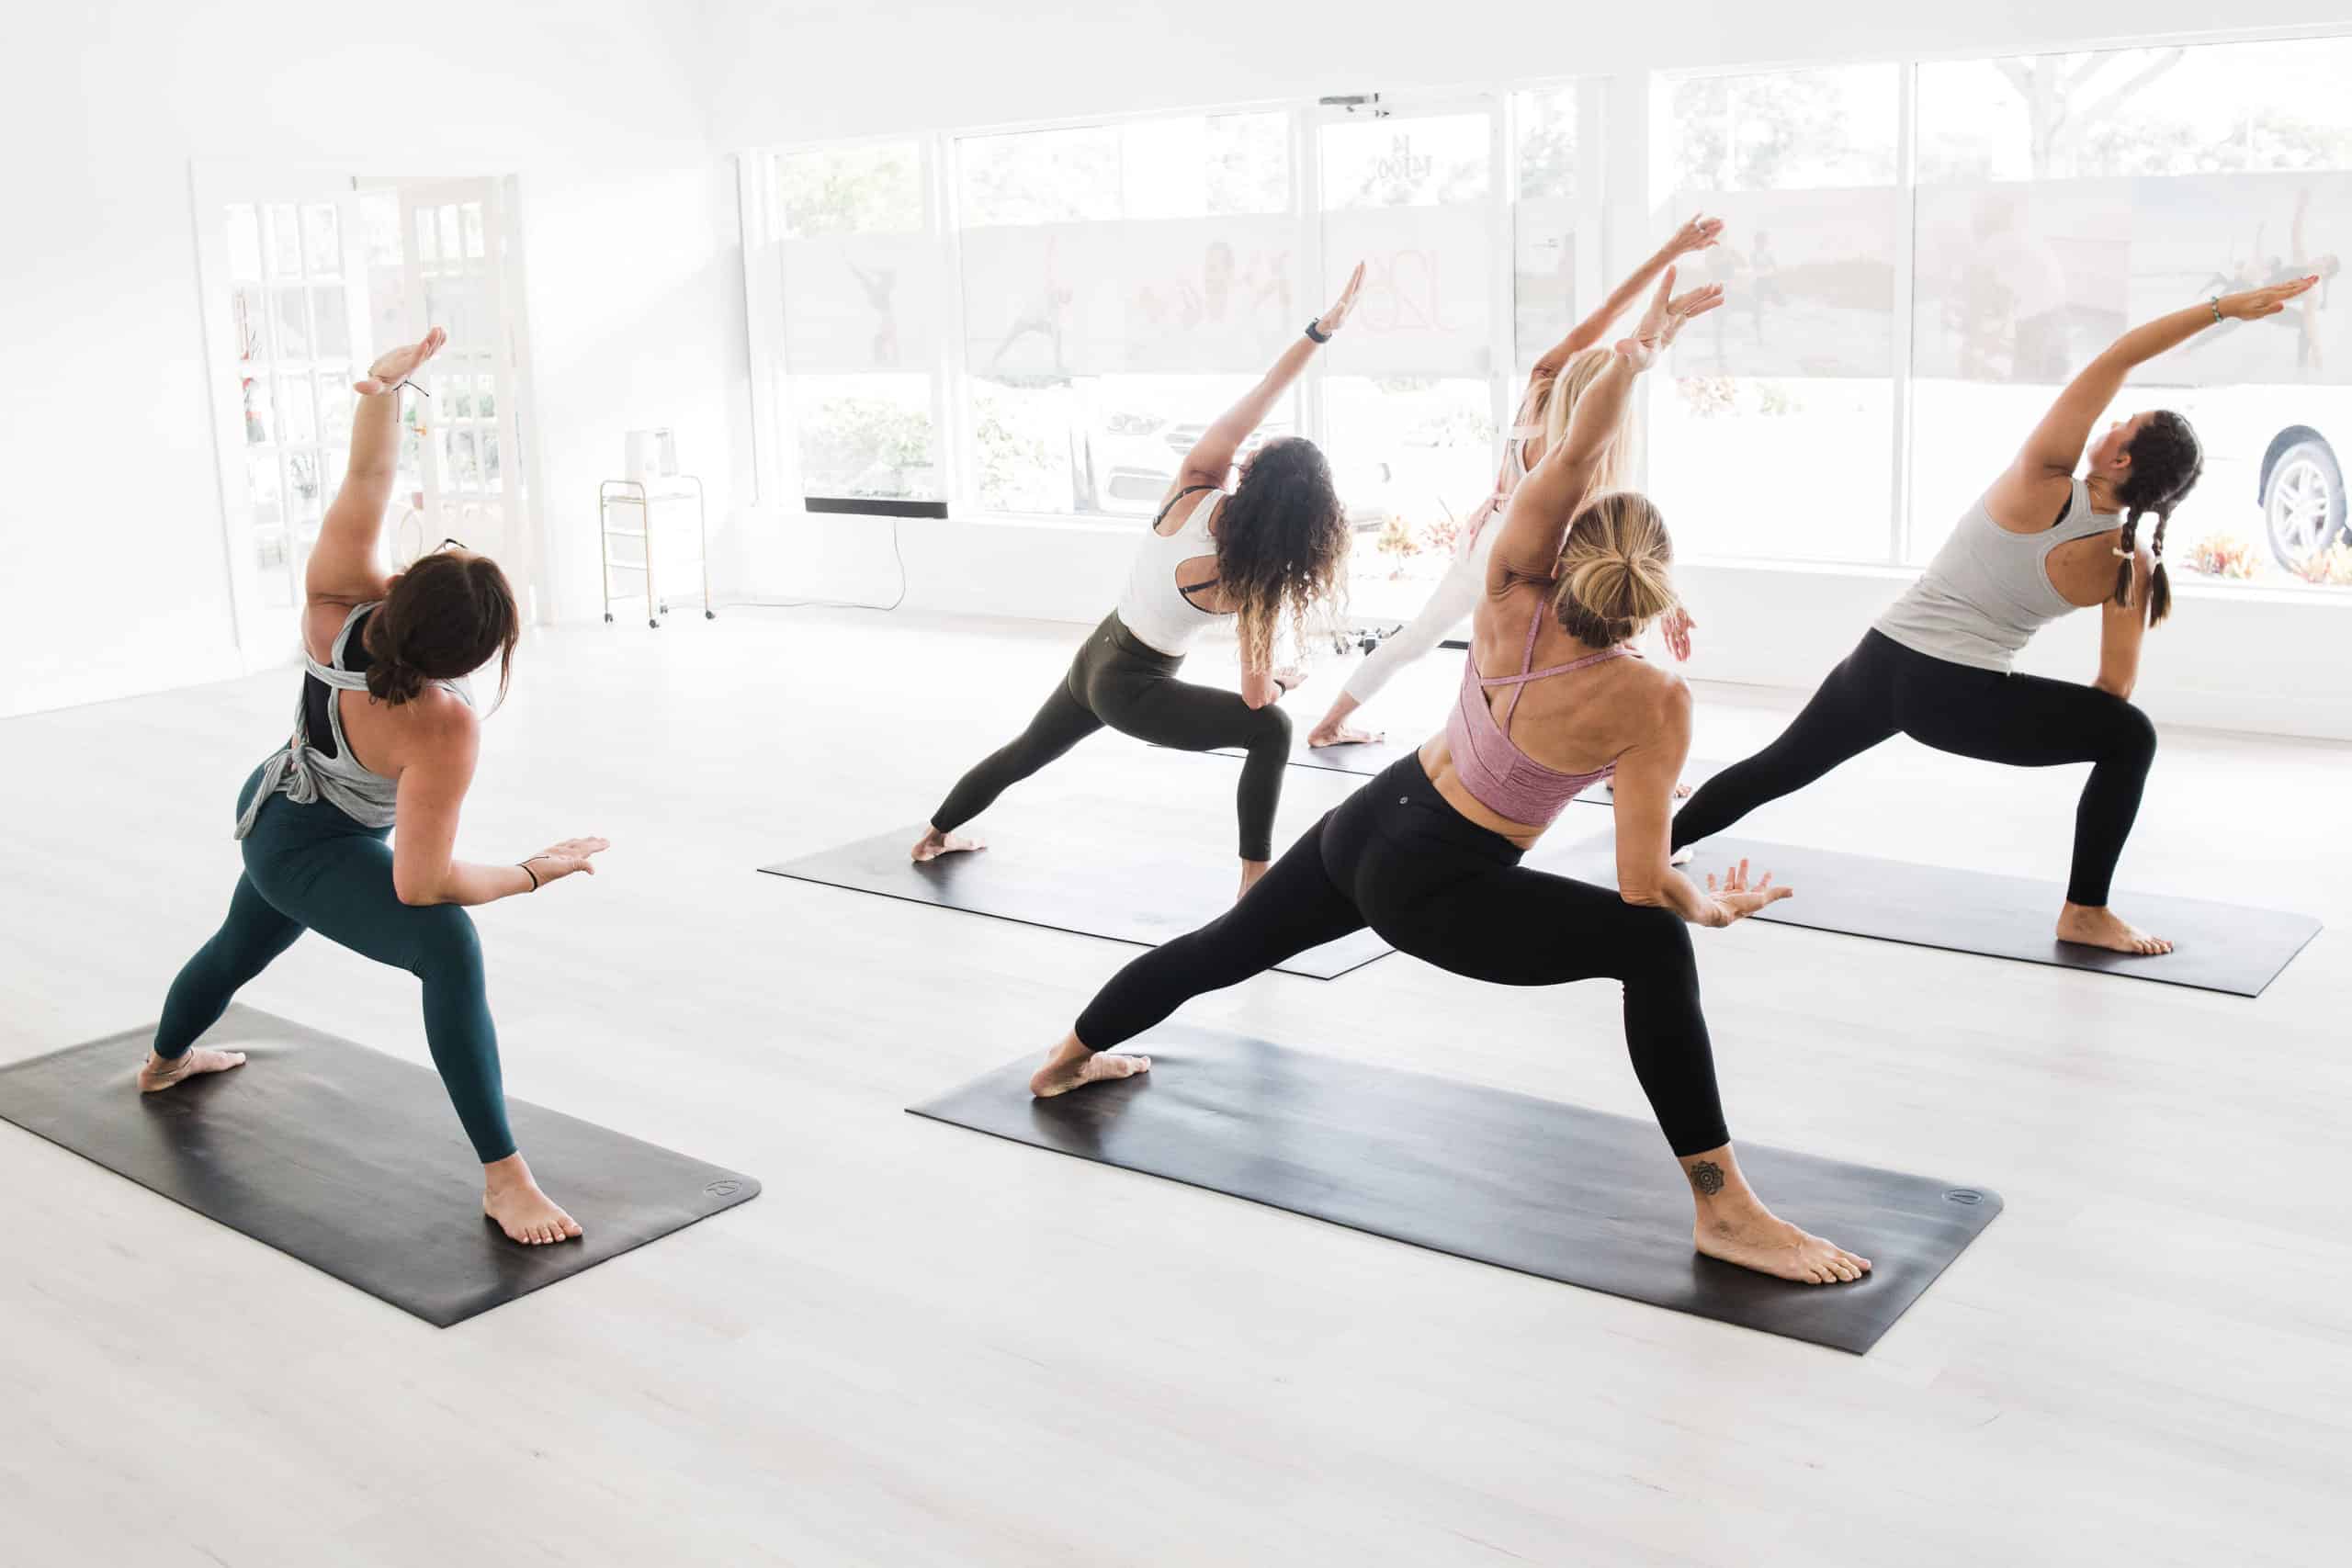 The 10 most beautiful yoga studios in the U.S.